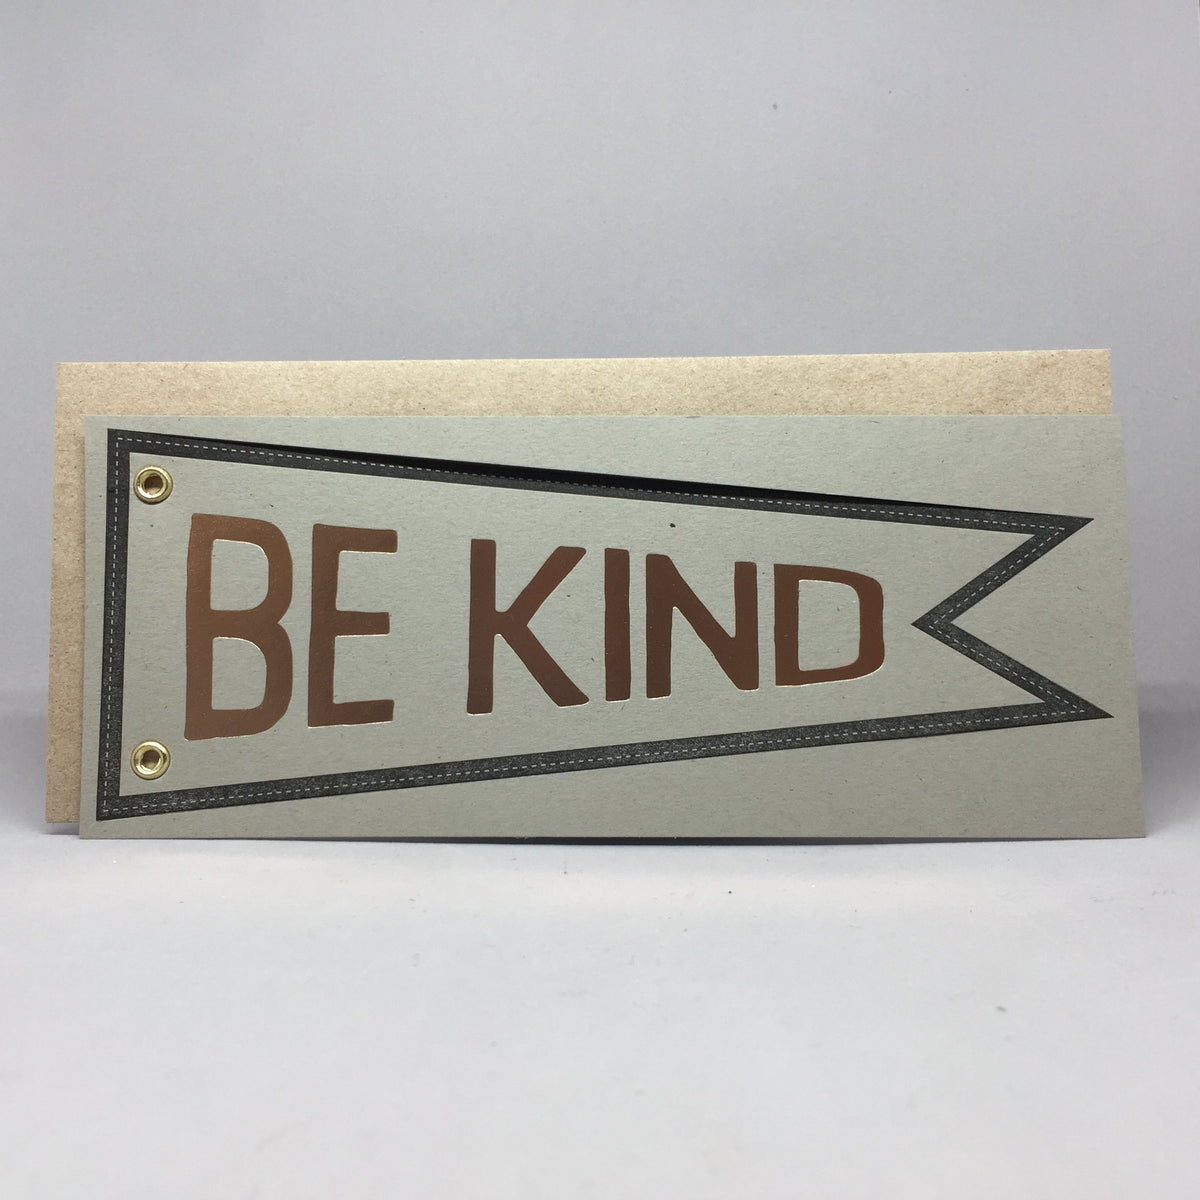 Be Kind Card